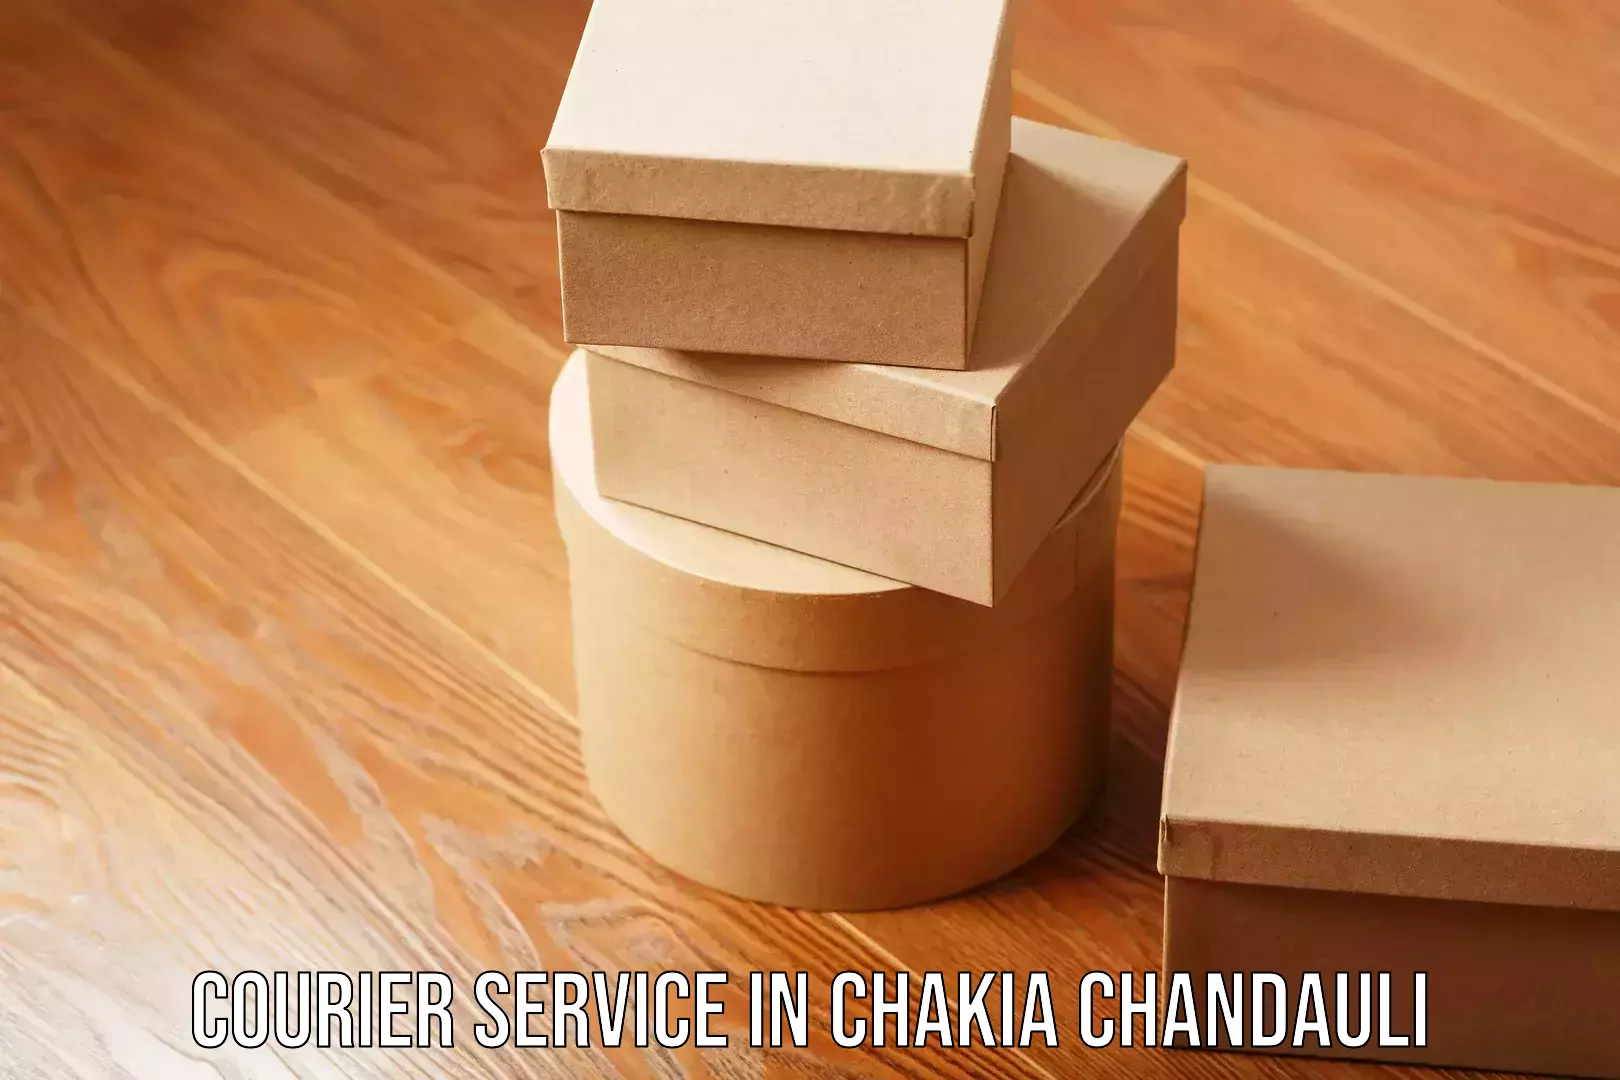 Advanced tracking systems in Chakia Chandauli